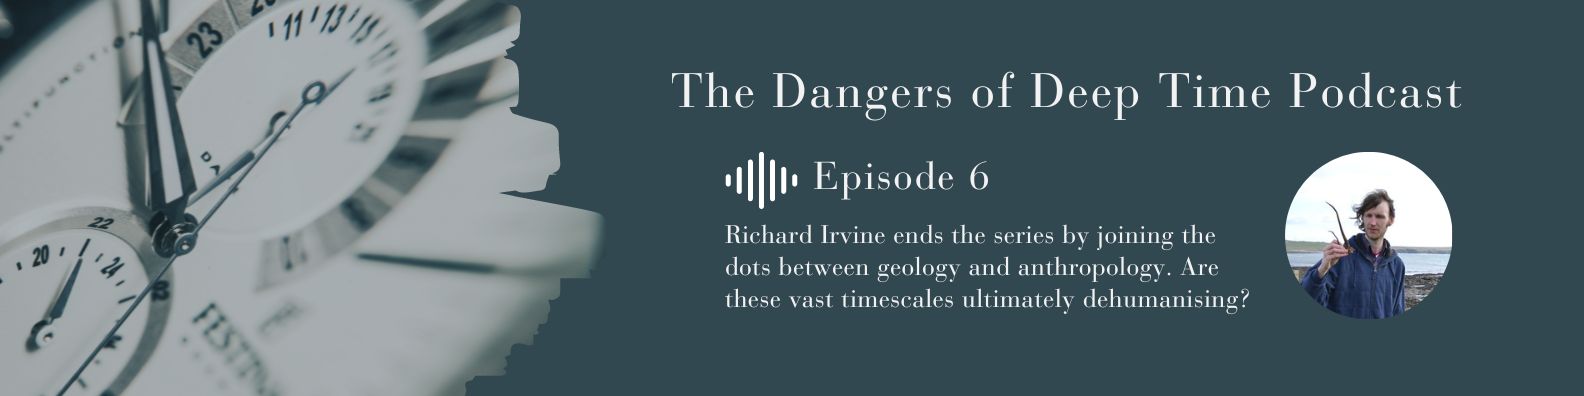 Dangers of Deep Time Podcast Episode 6 Irvine